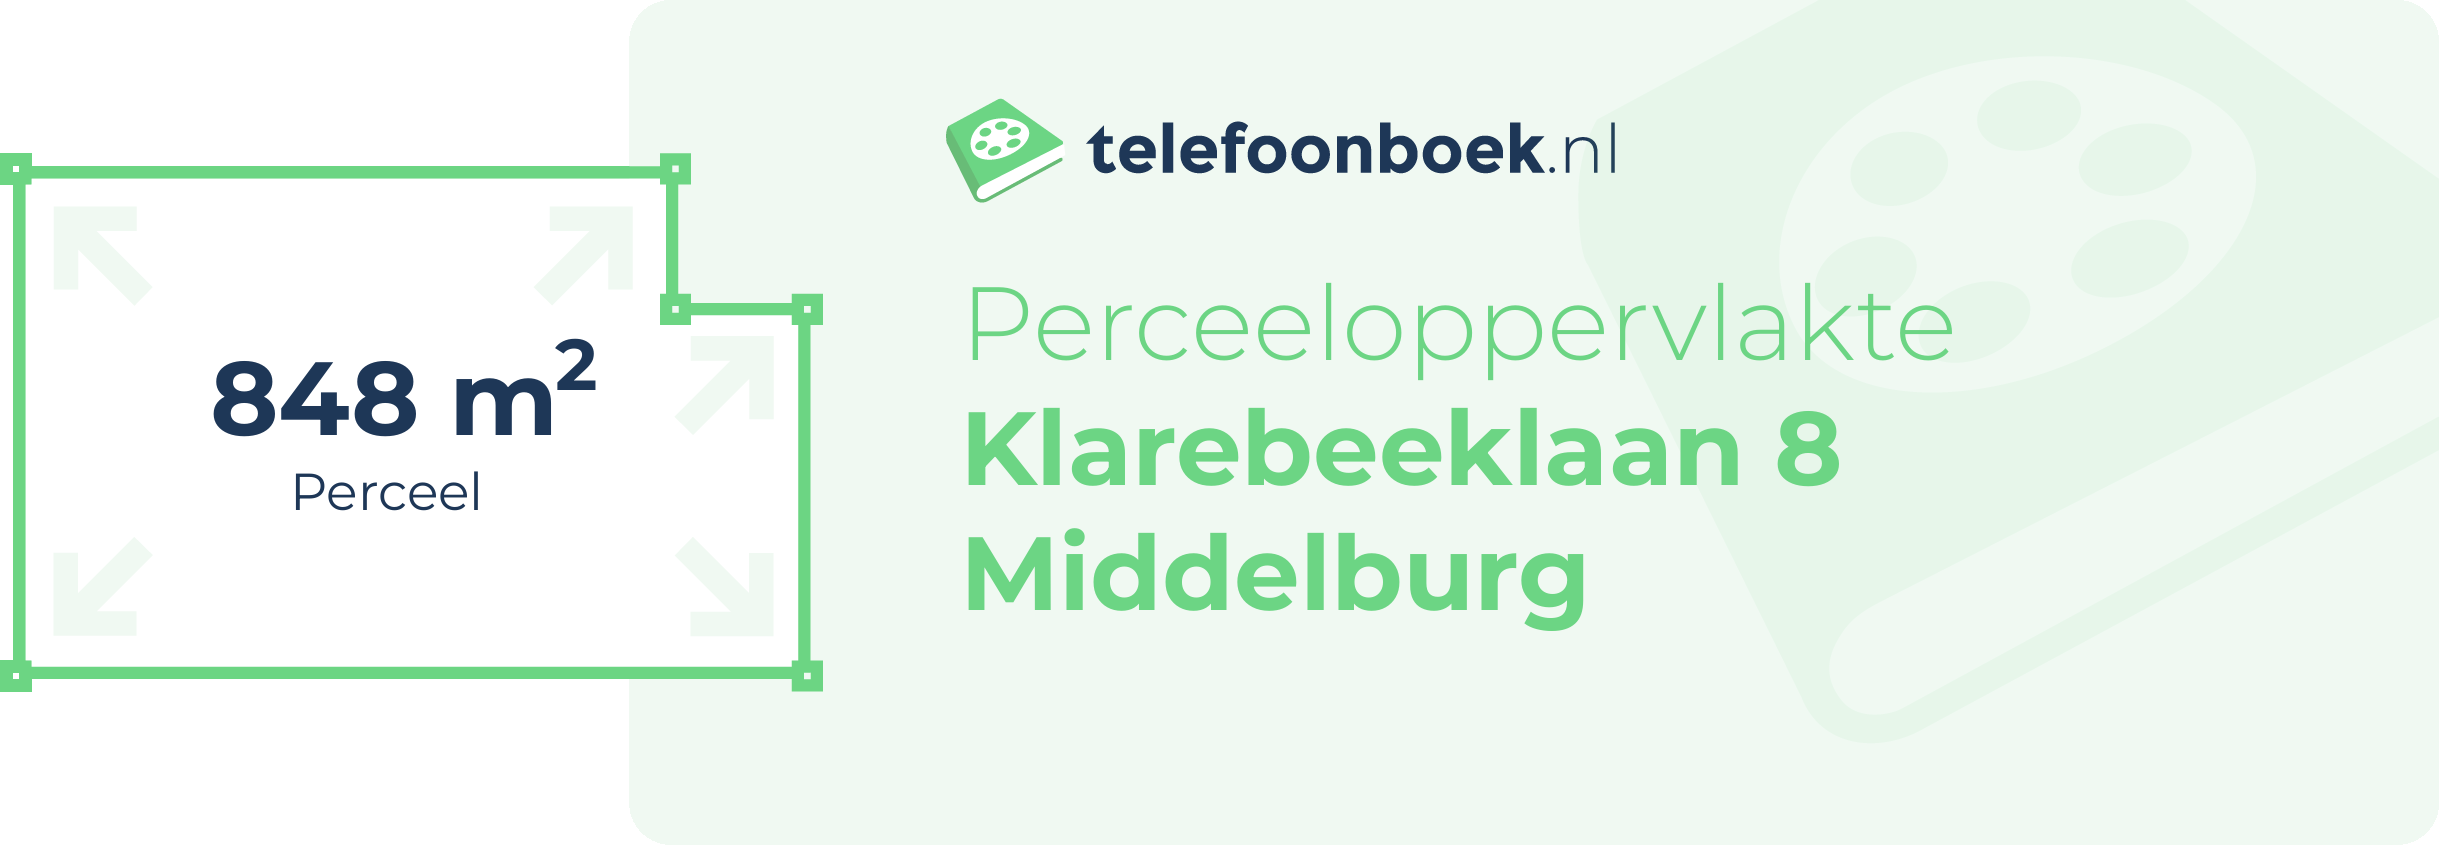 Perceeloppervlakte Klarebeeklaan 8 Middelburg